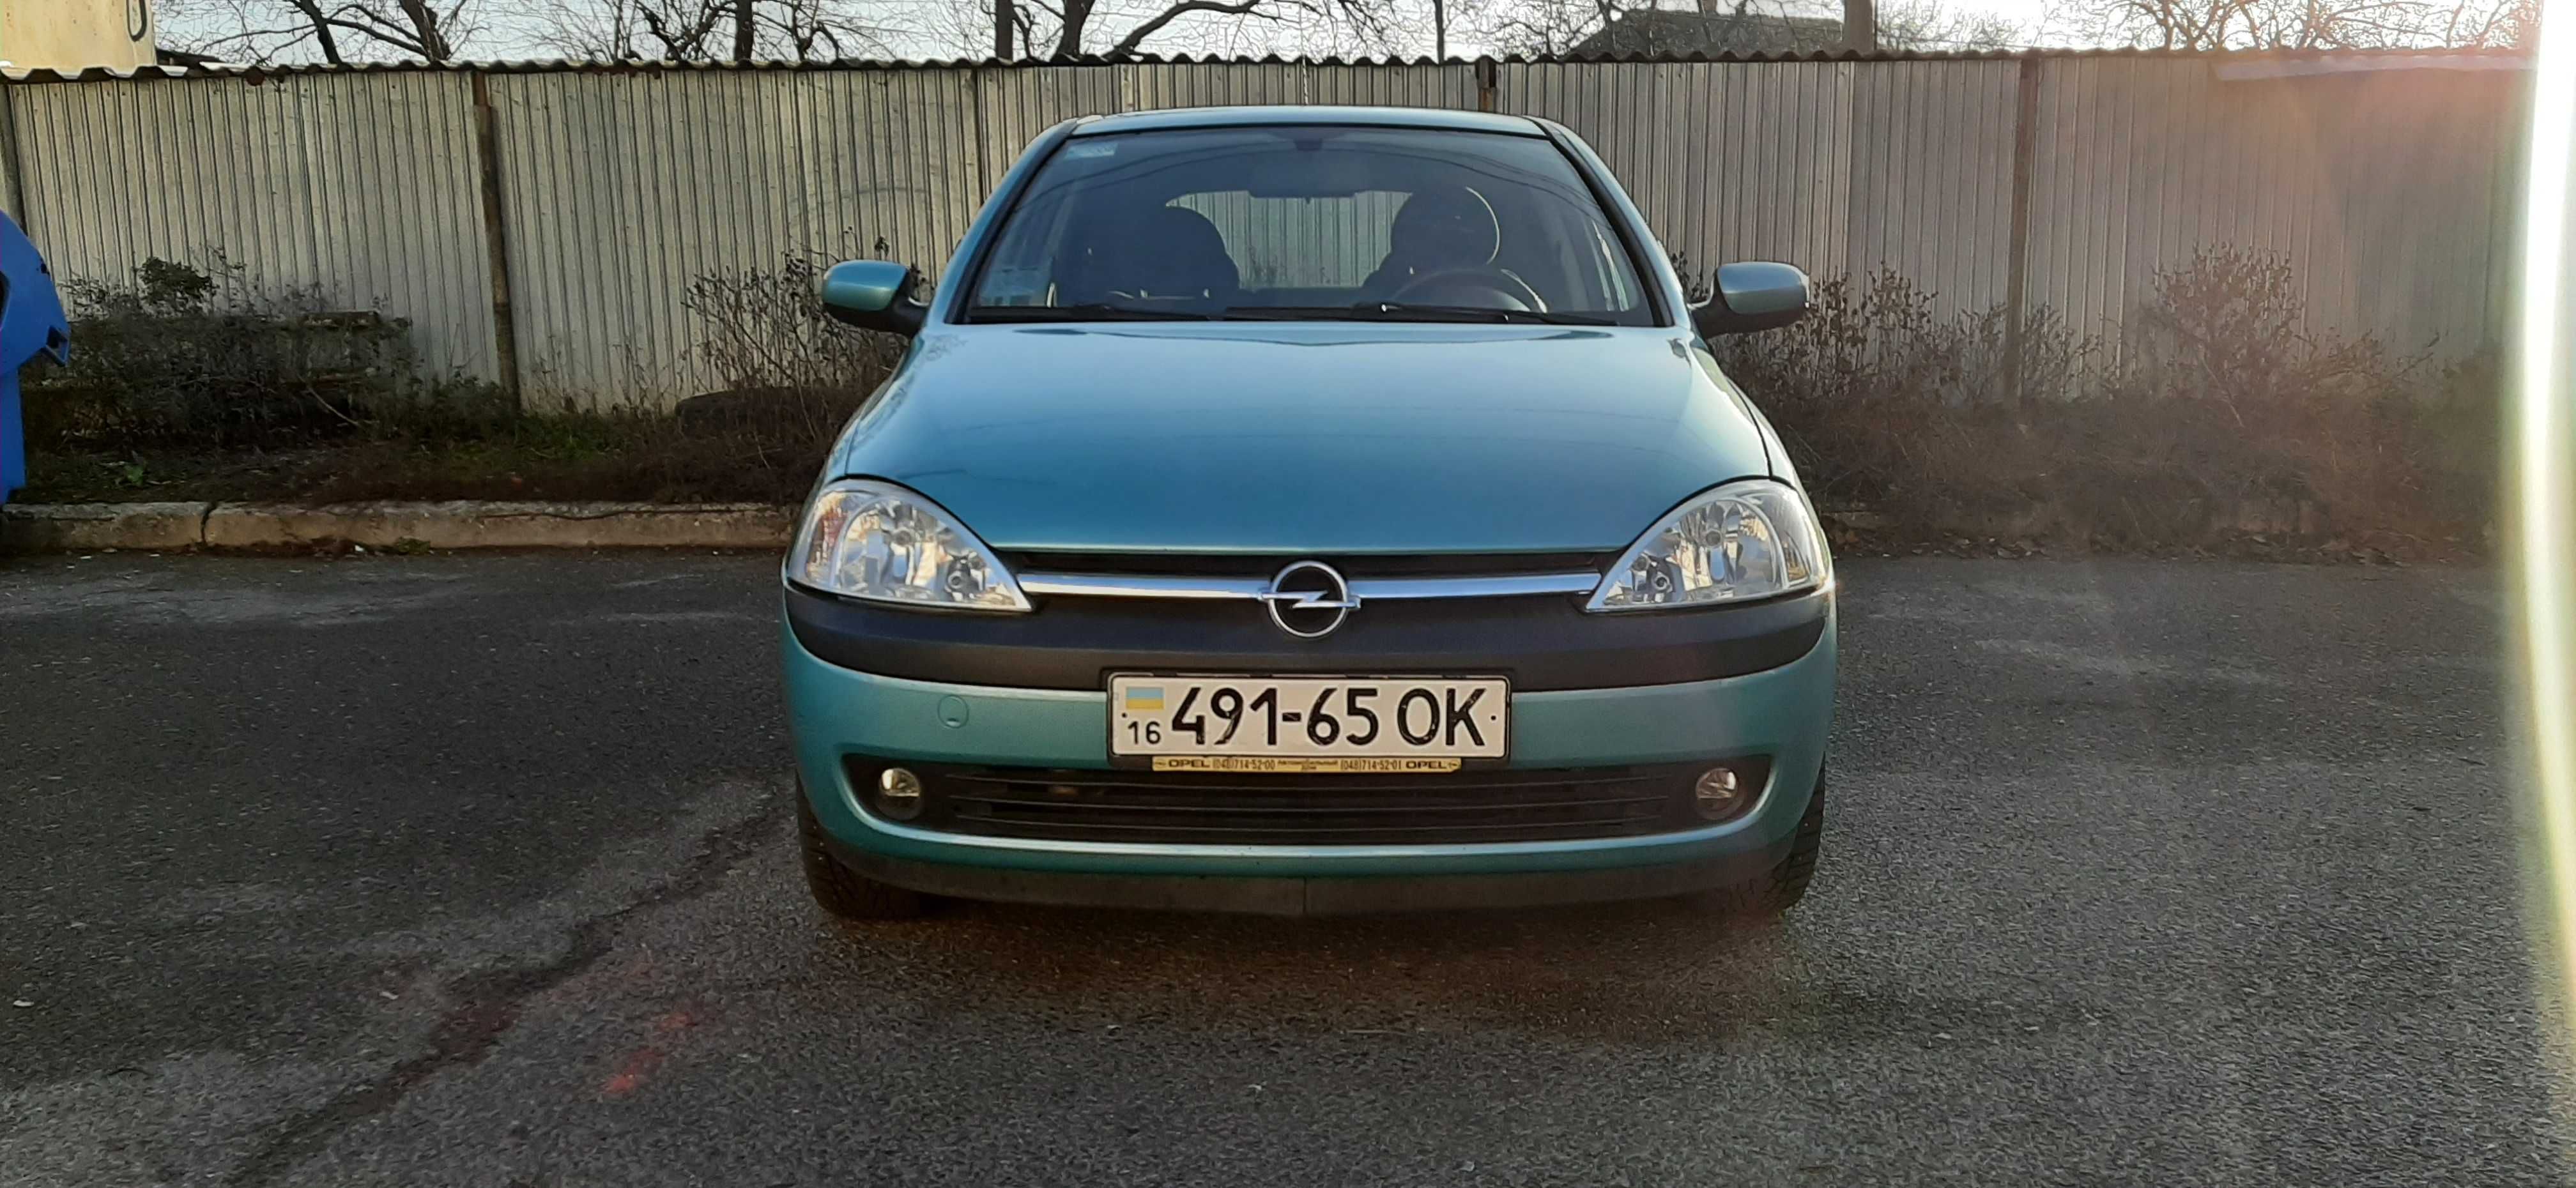 Opel Corsa 1.2 2002 г.в.